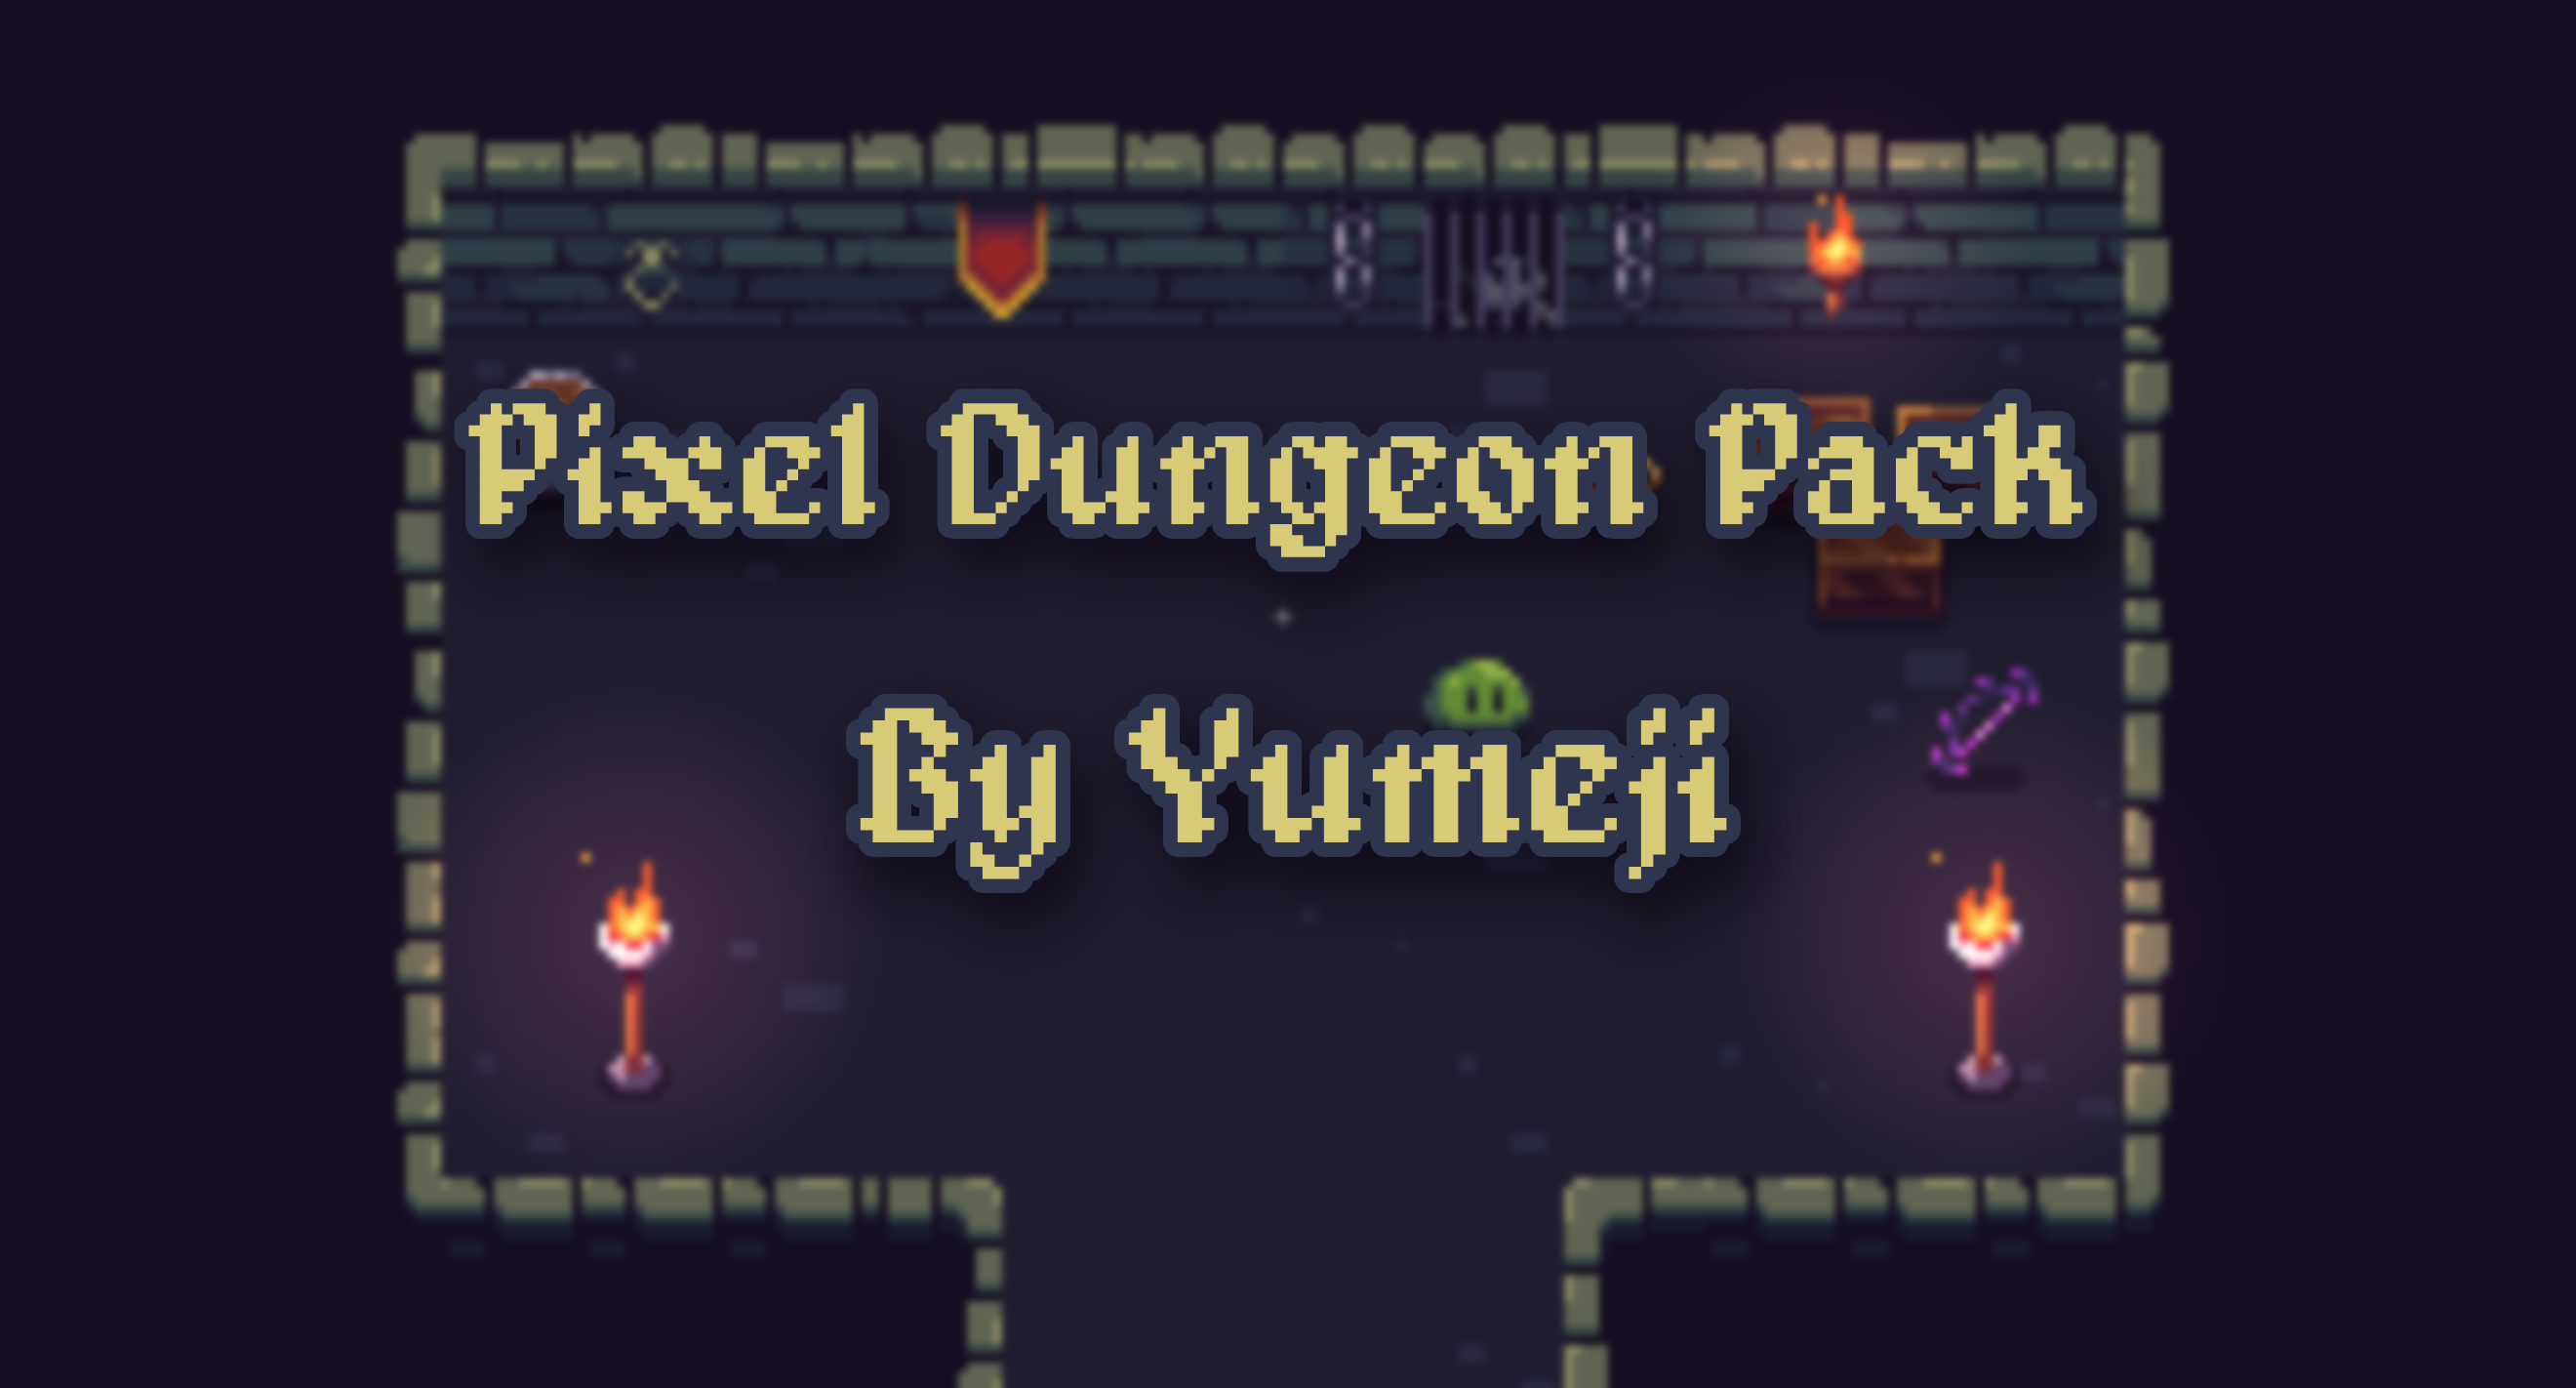 Pixel Dungeon Pack - 16x16 - By Yumeji